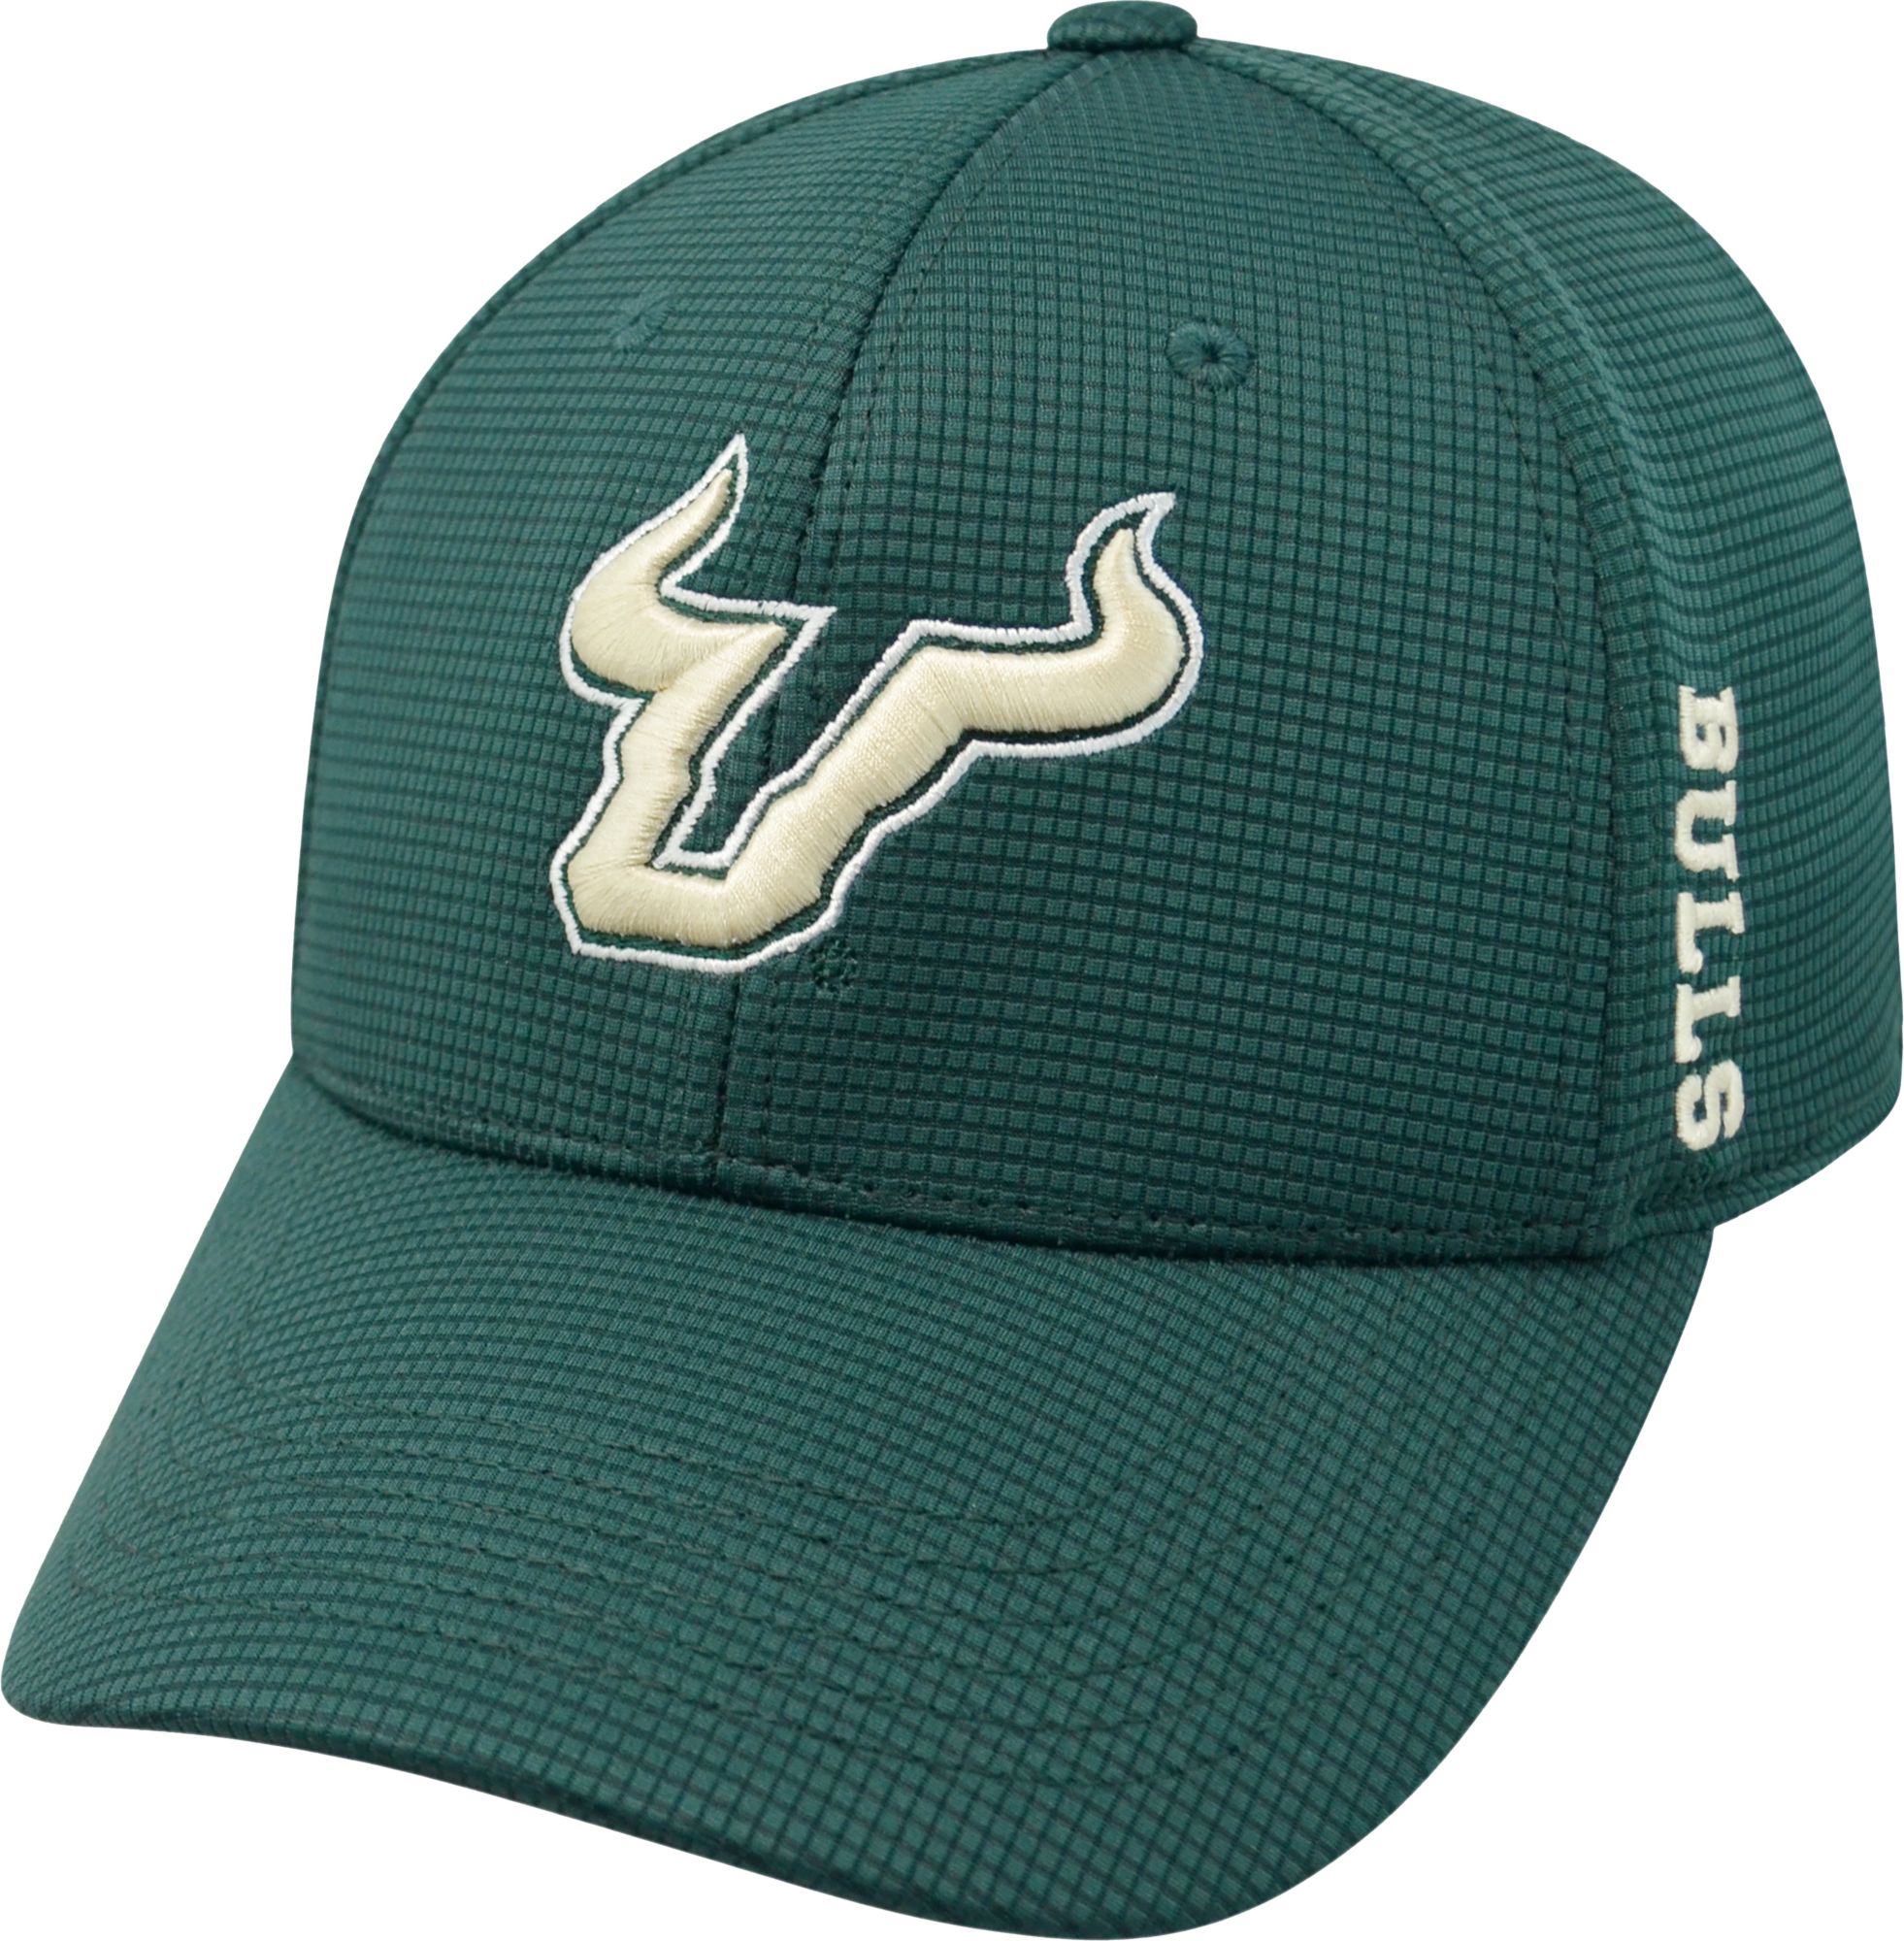 Usf Bulls Hats | Best Price Guarantee at DICK'S